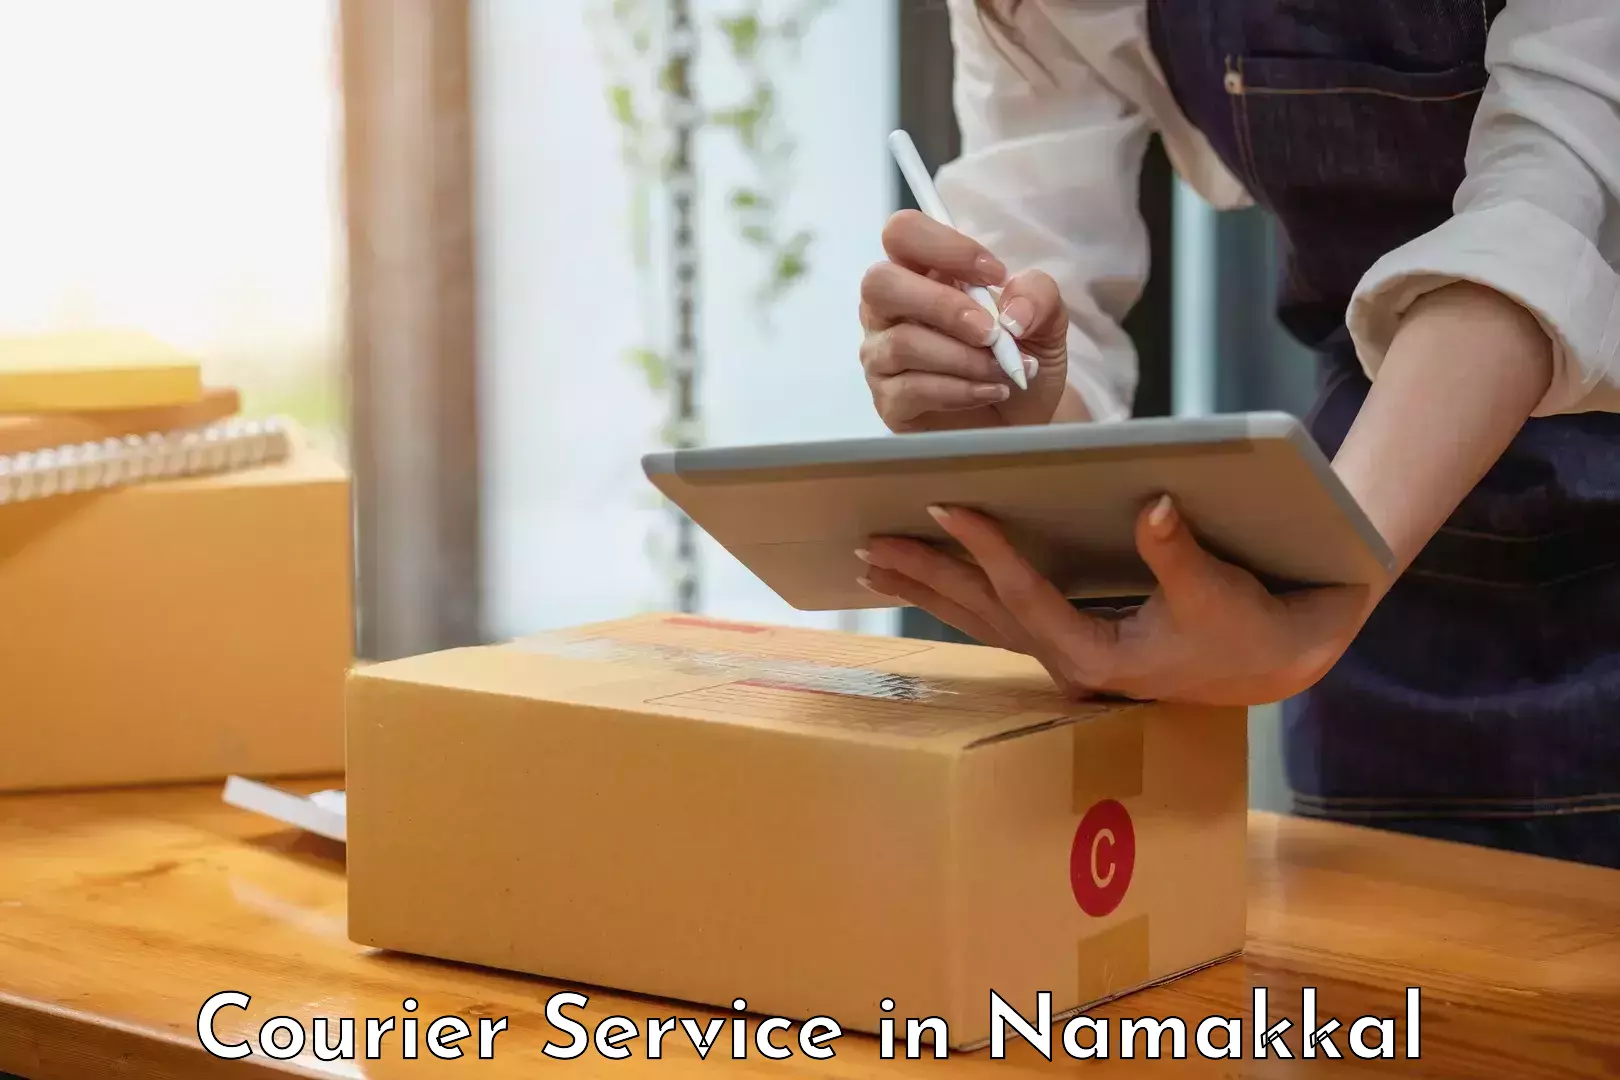 Efficient logistics management in Namakkal